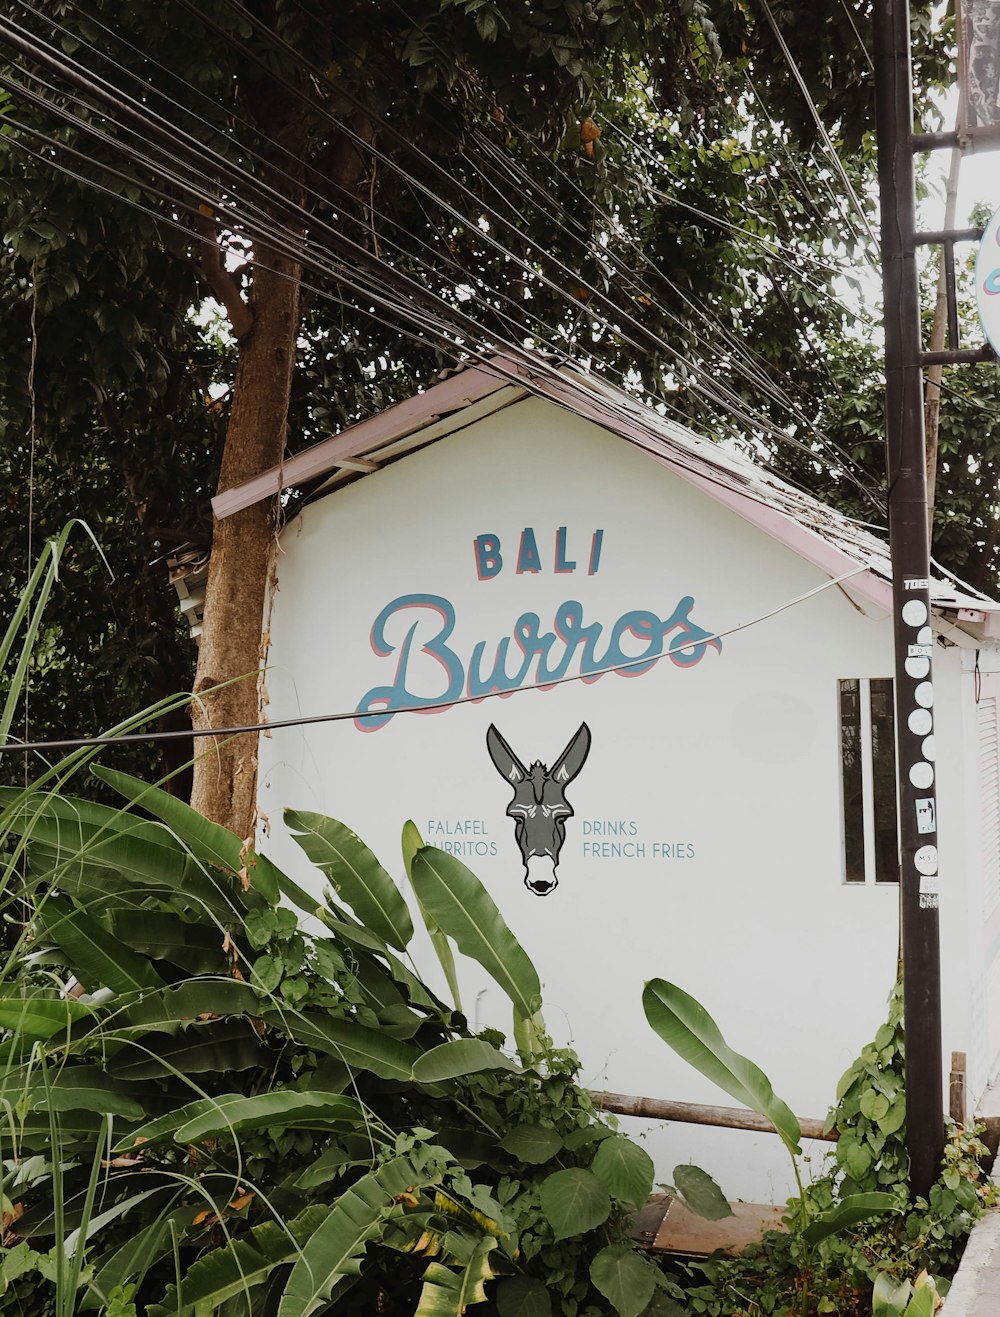 Bali Burros building